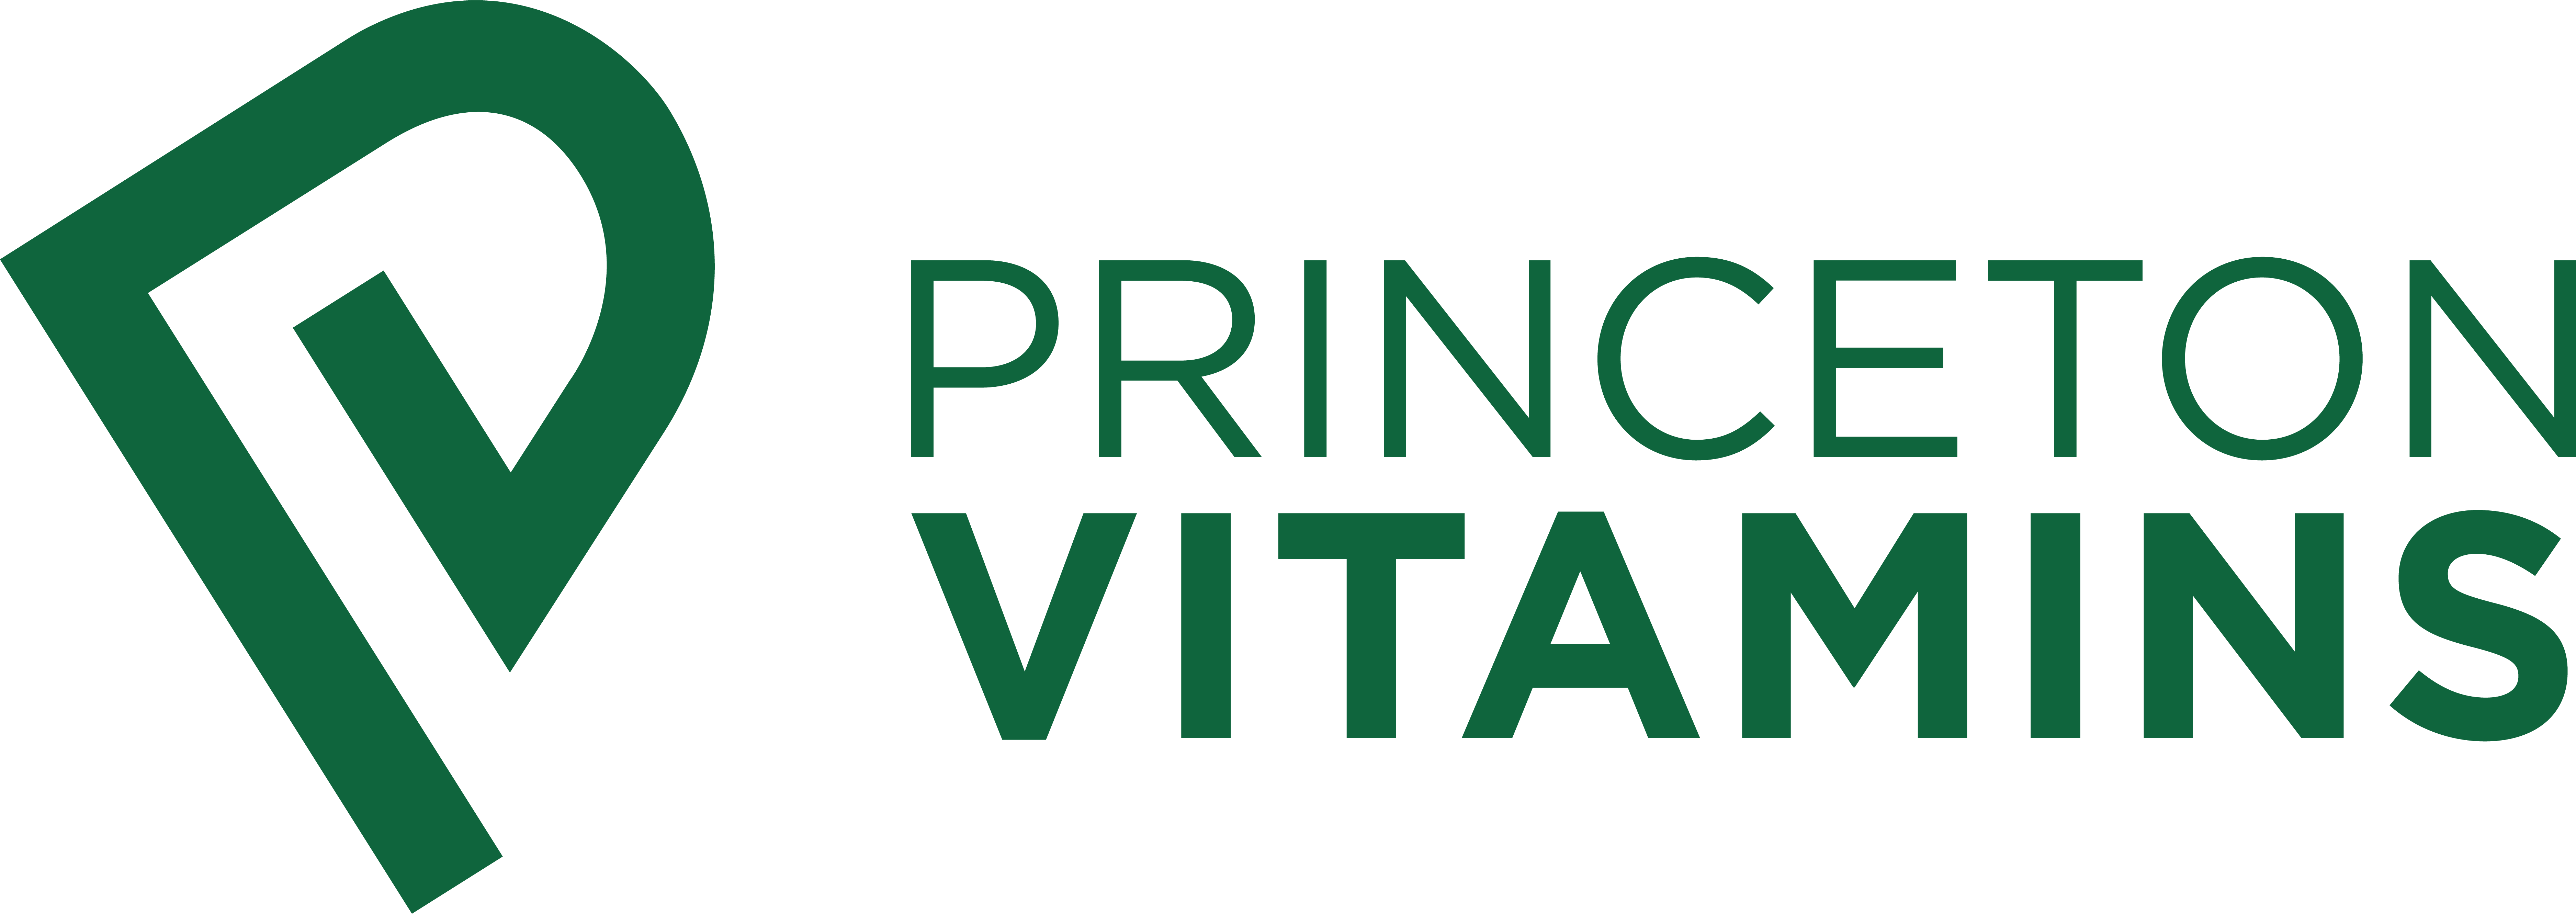 Princeton Vitamins